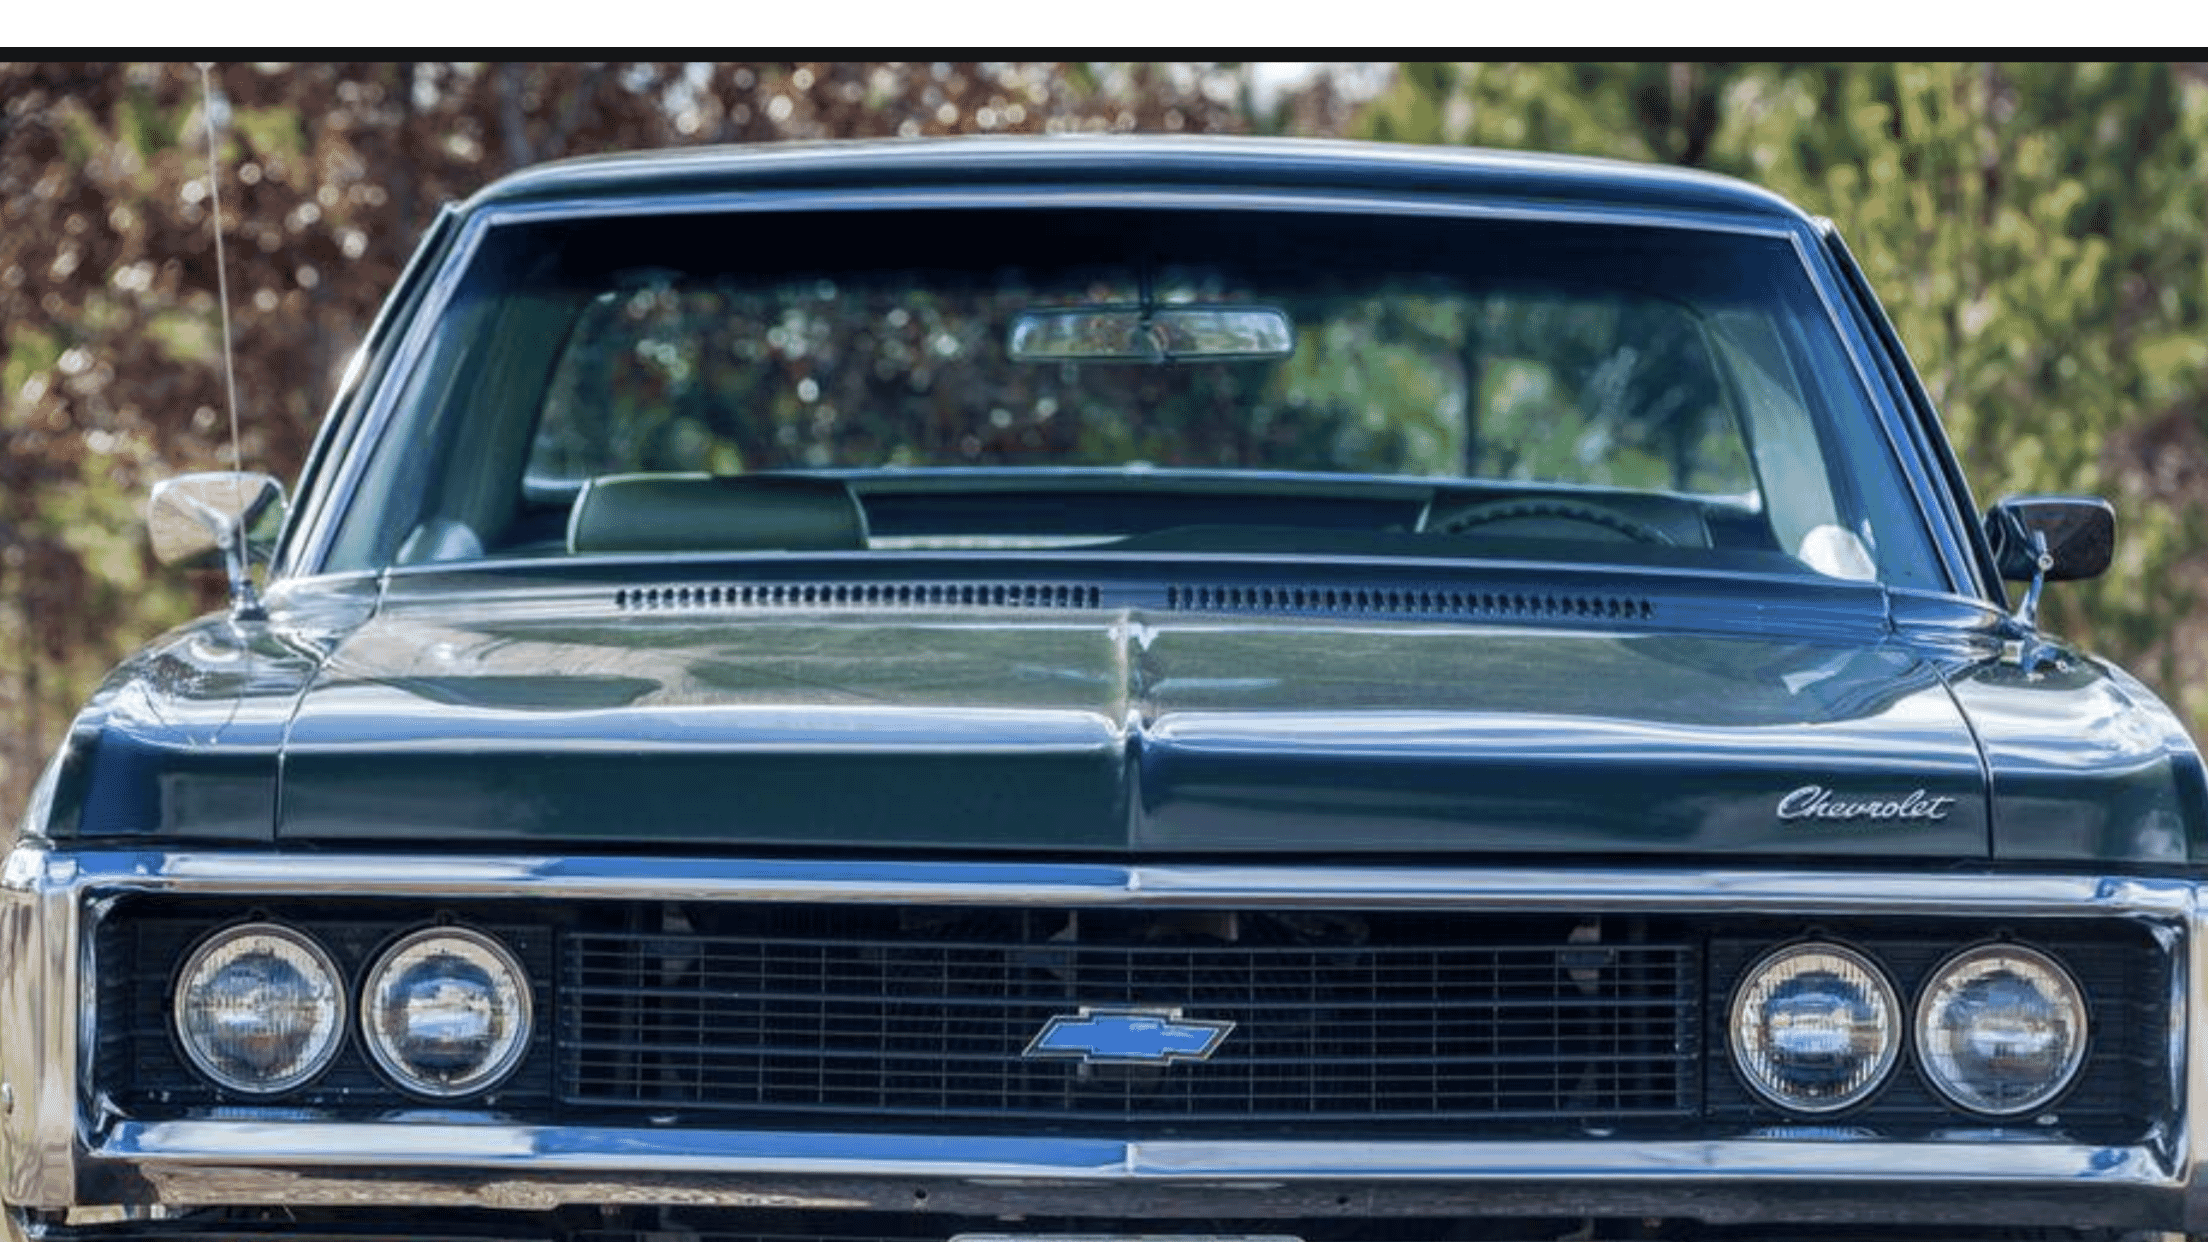 Front view of a 1969 Chevrolet Biscayne two door hardtop